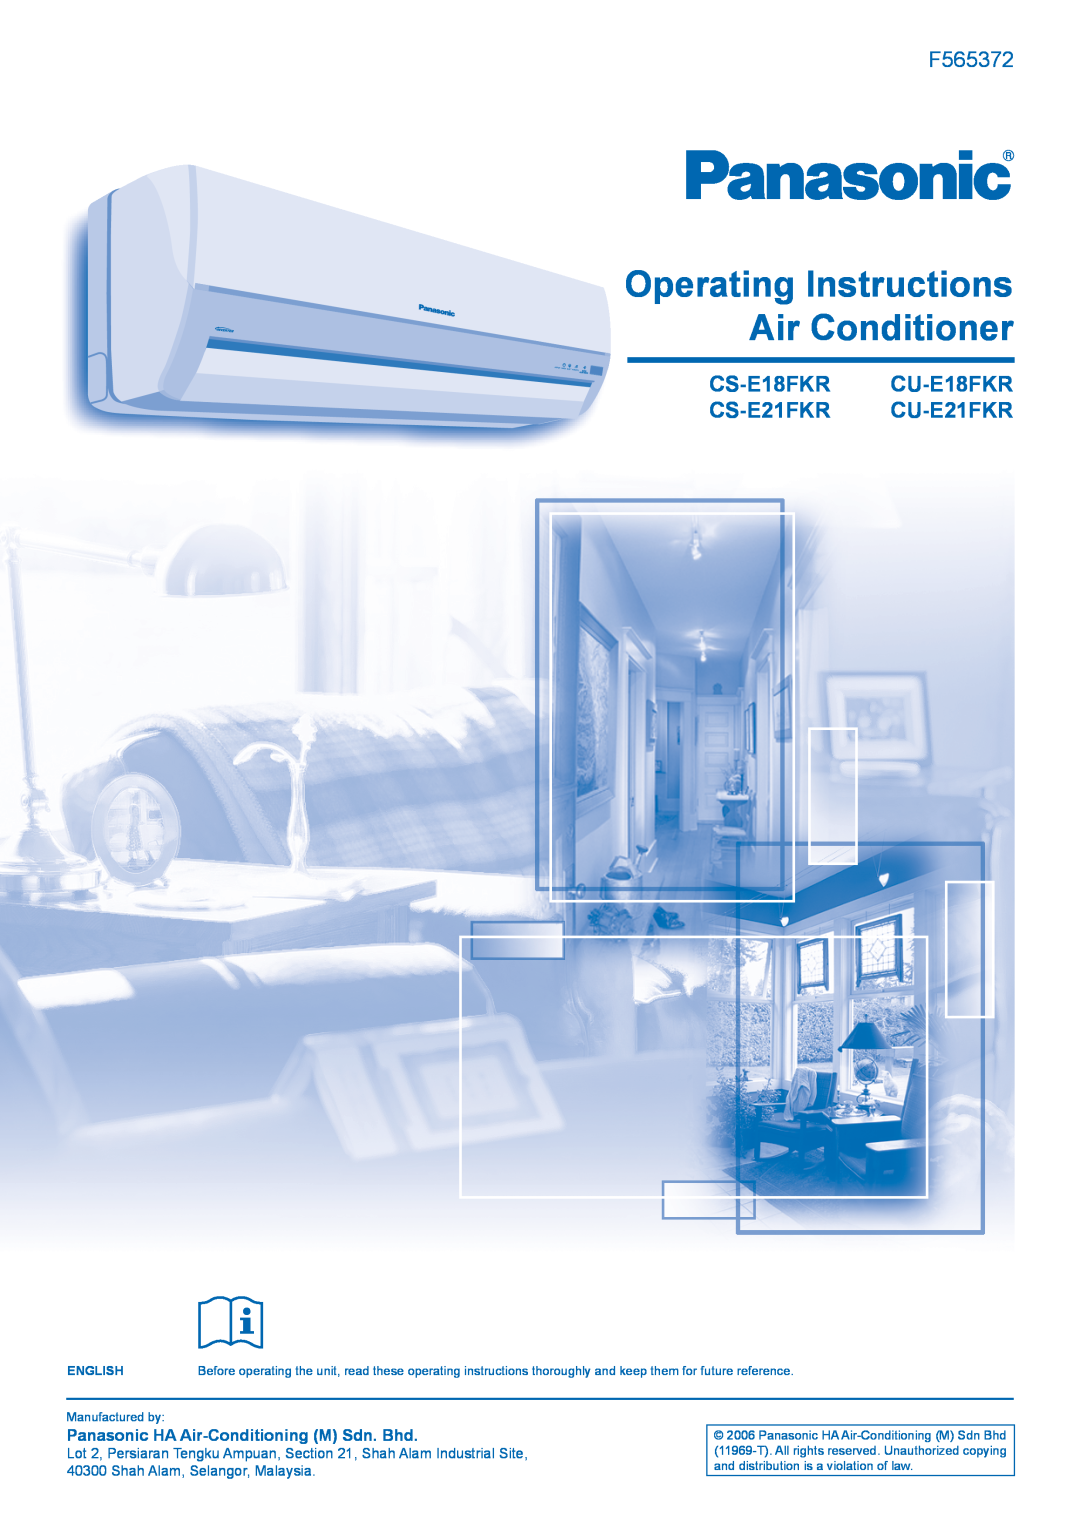 Panasonic manual Operating Instructions Air Conditioner, F565372, CS-E18FKR CU-E18FKR CS-E21FKR CU-E21FKR, English 